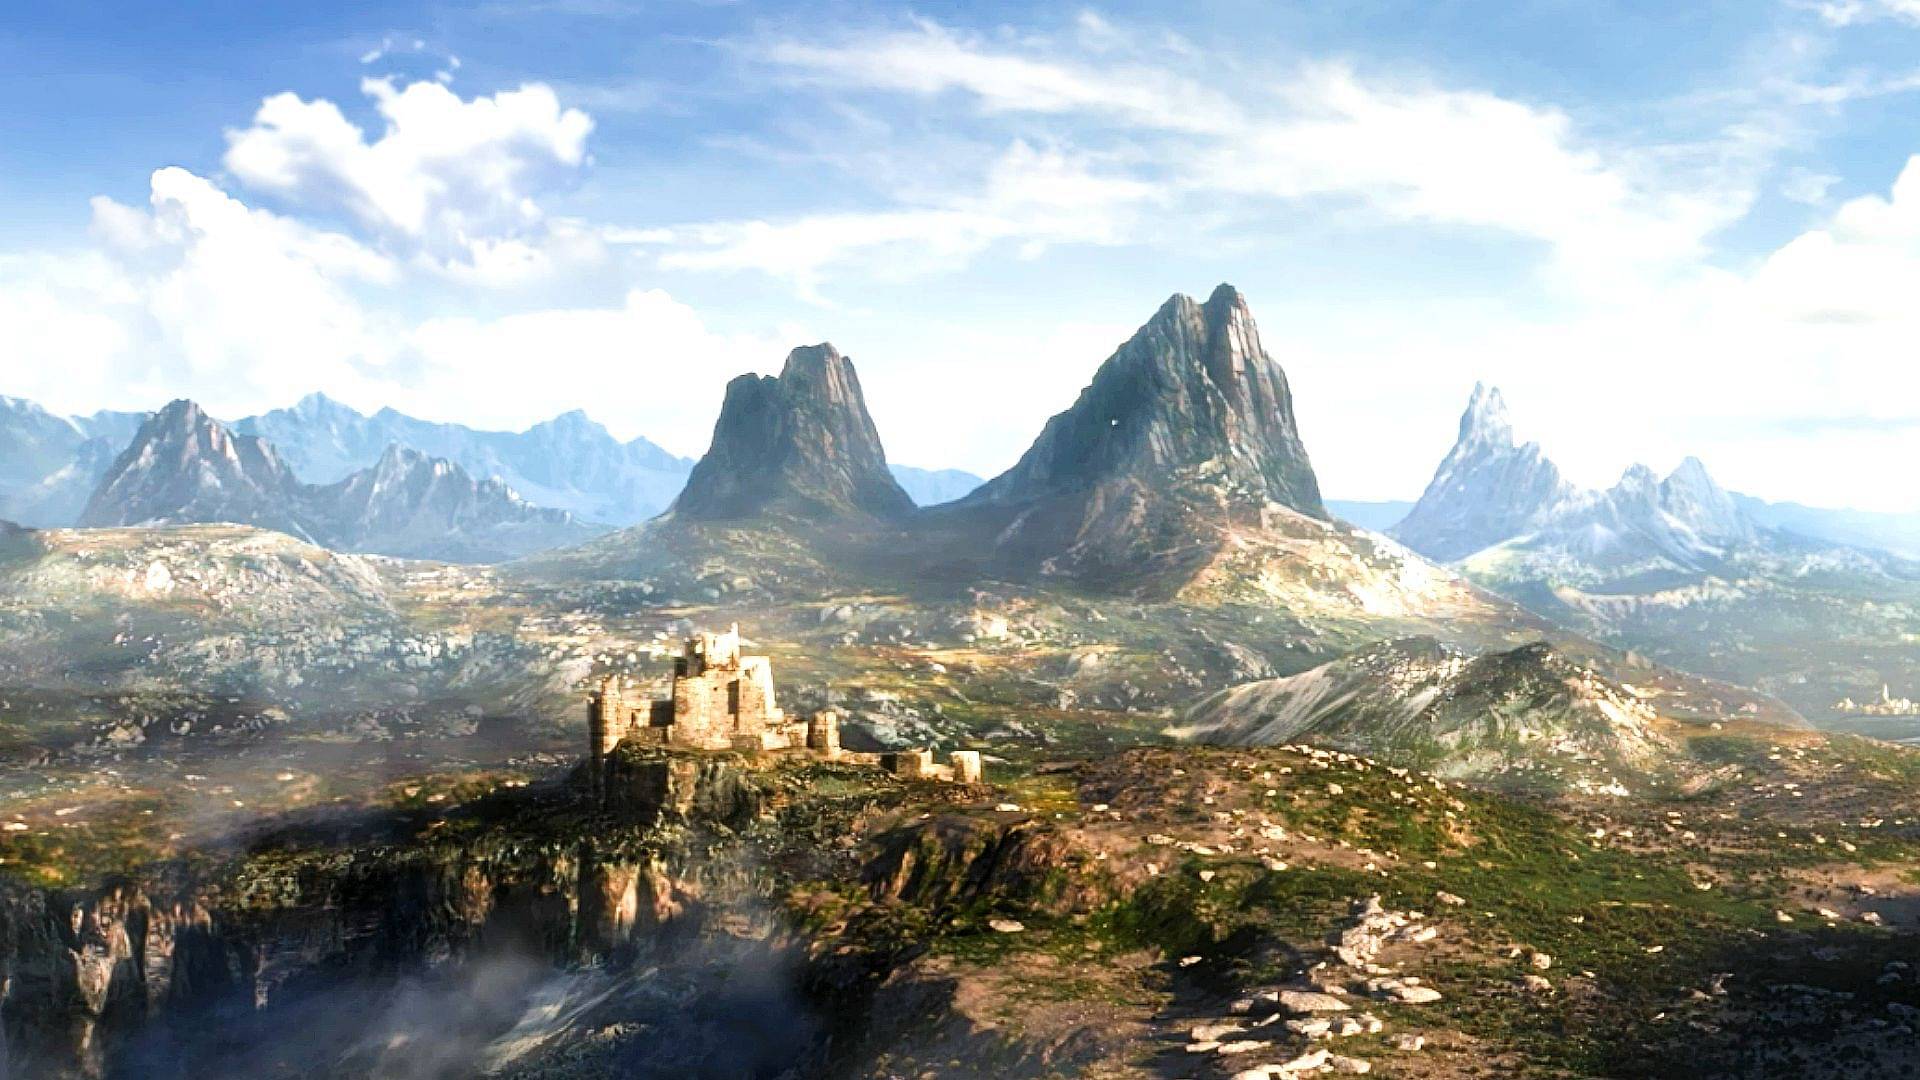 A landscape from The Elder Scrolls VI